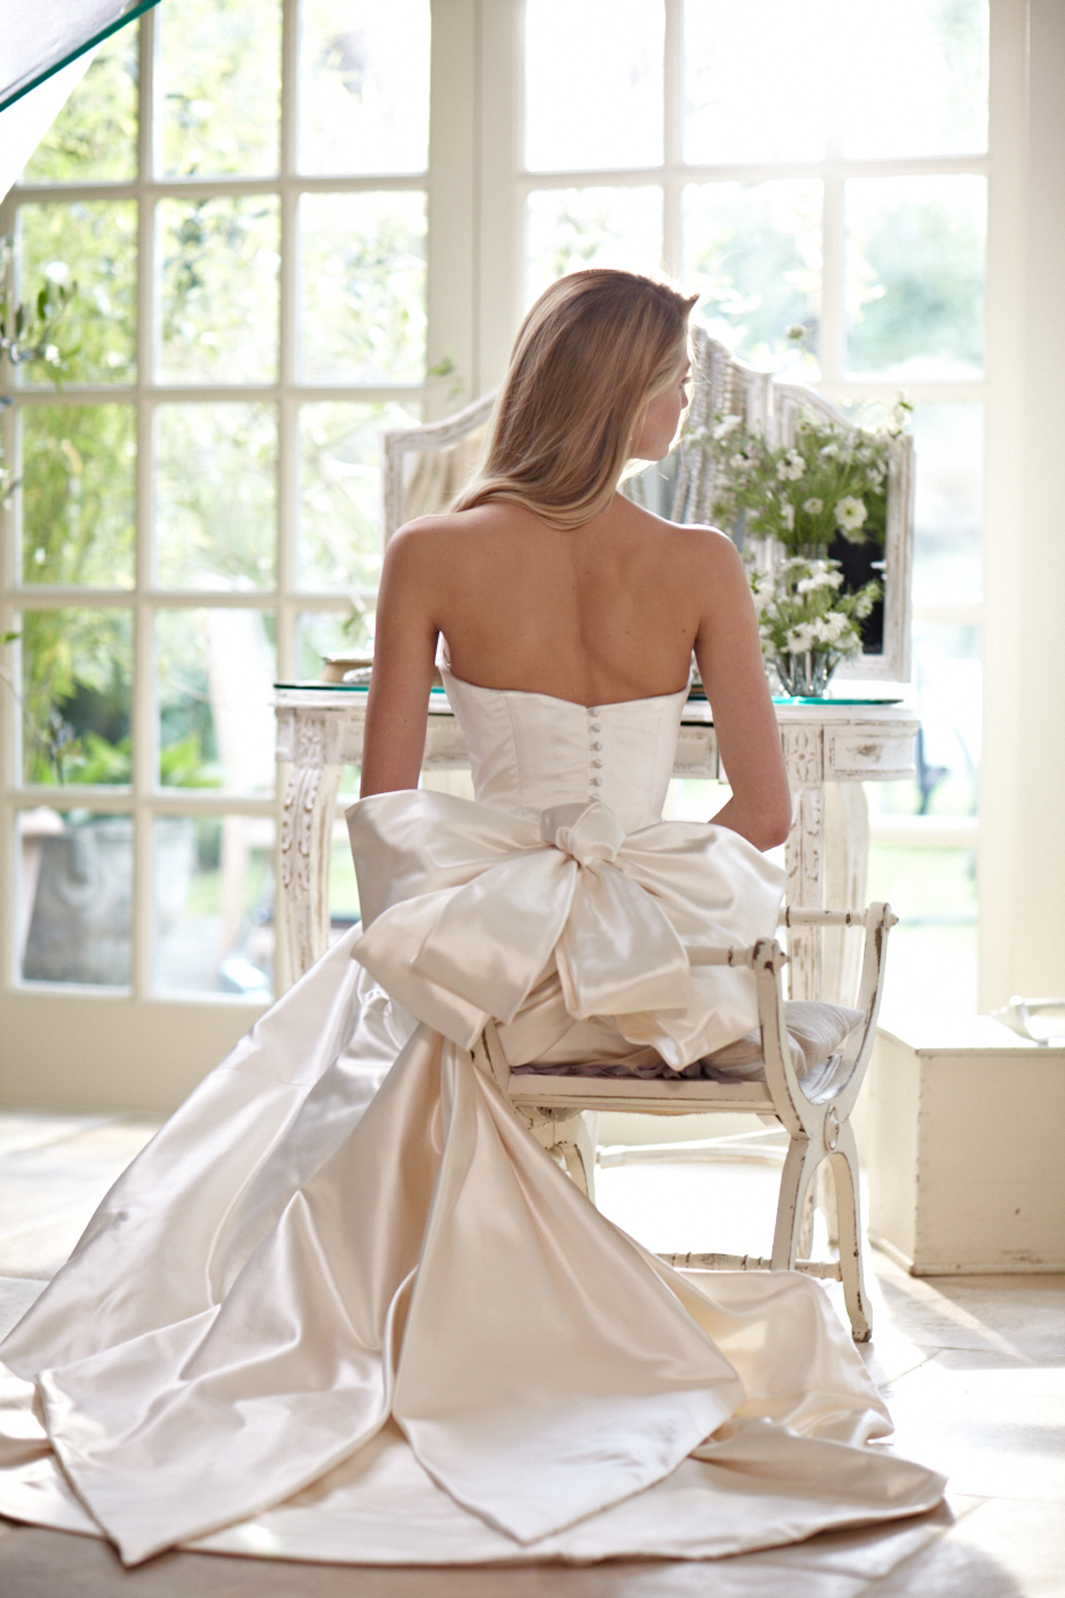 Phillipa Lepley couture wedding dress sample sale, 2016